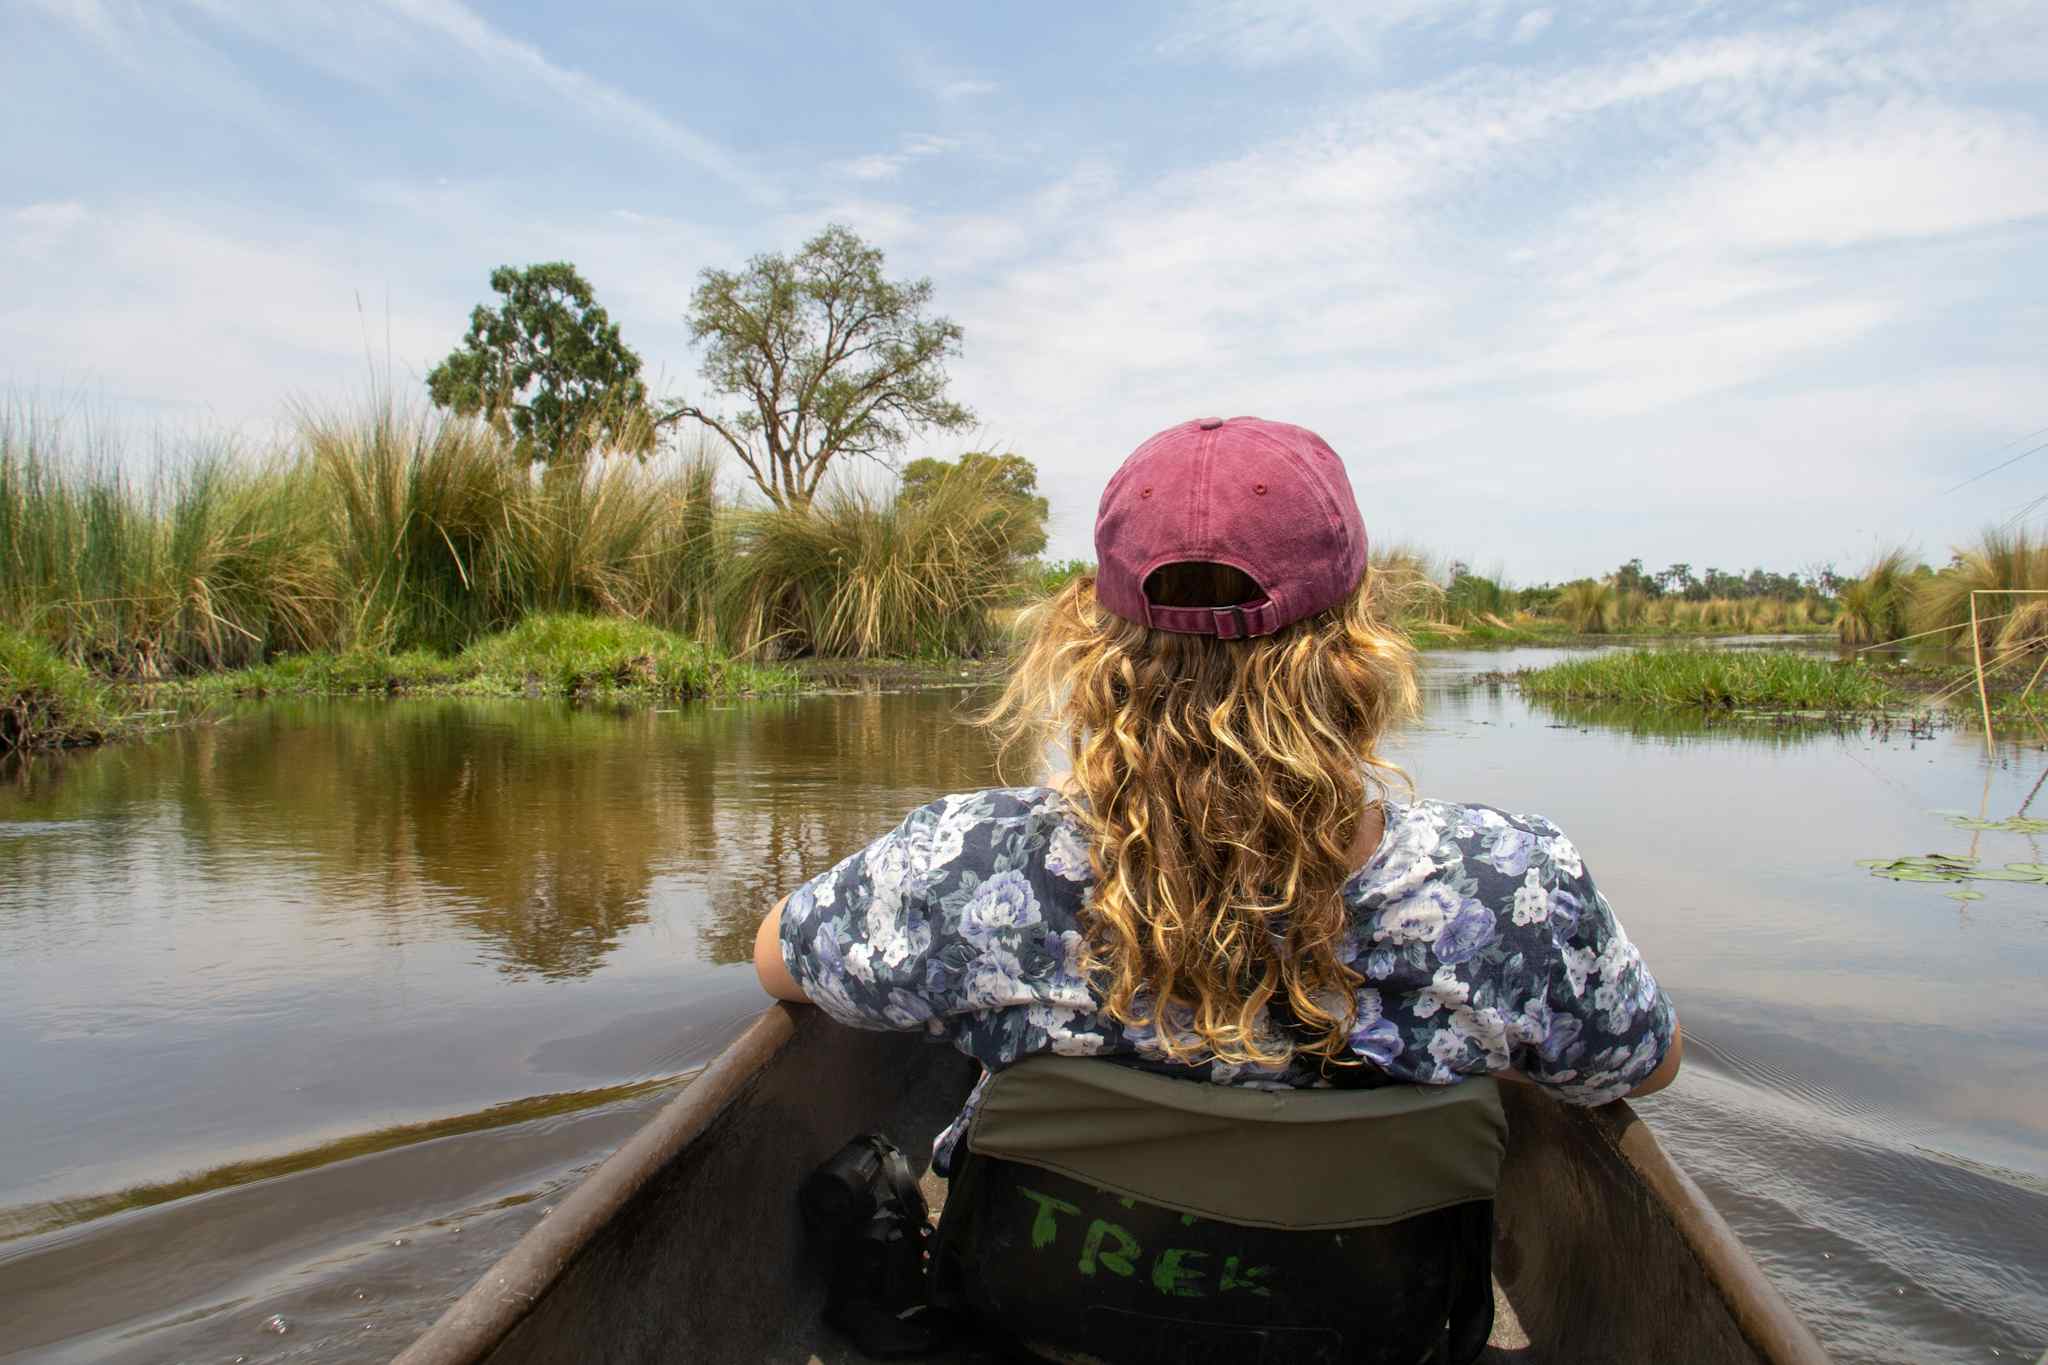 STAFF - Girl on a mokoro joruney in the Okavango Delta, Botswana Photo: Customer/Chris Kearney
